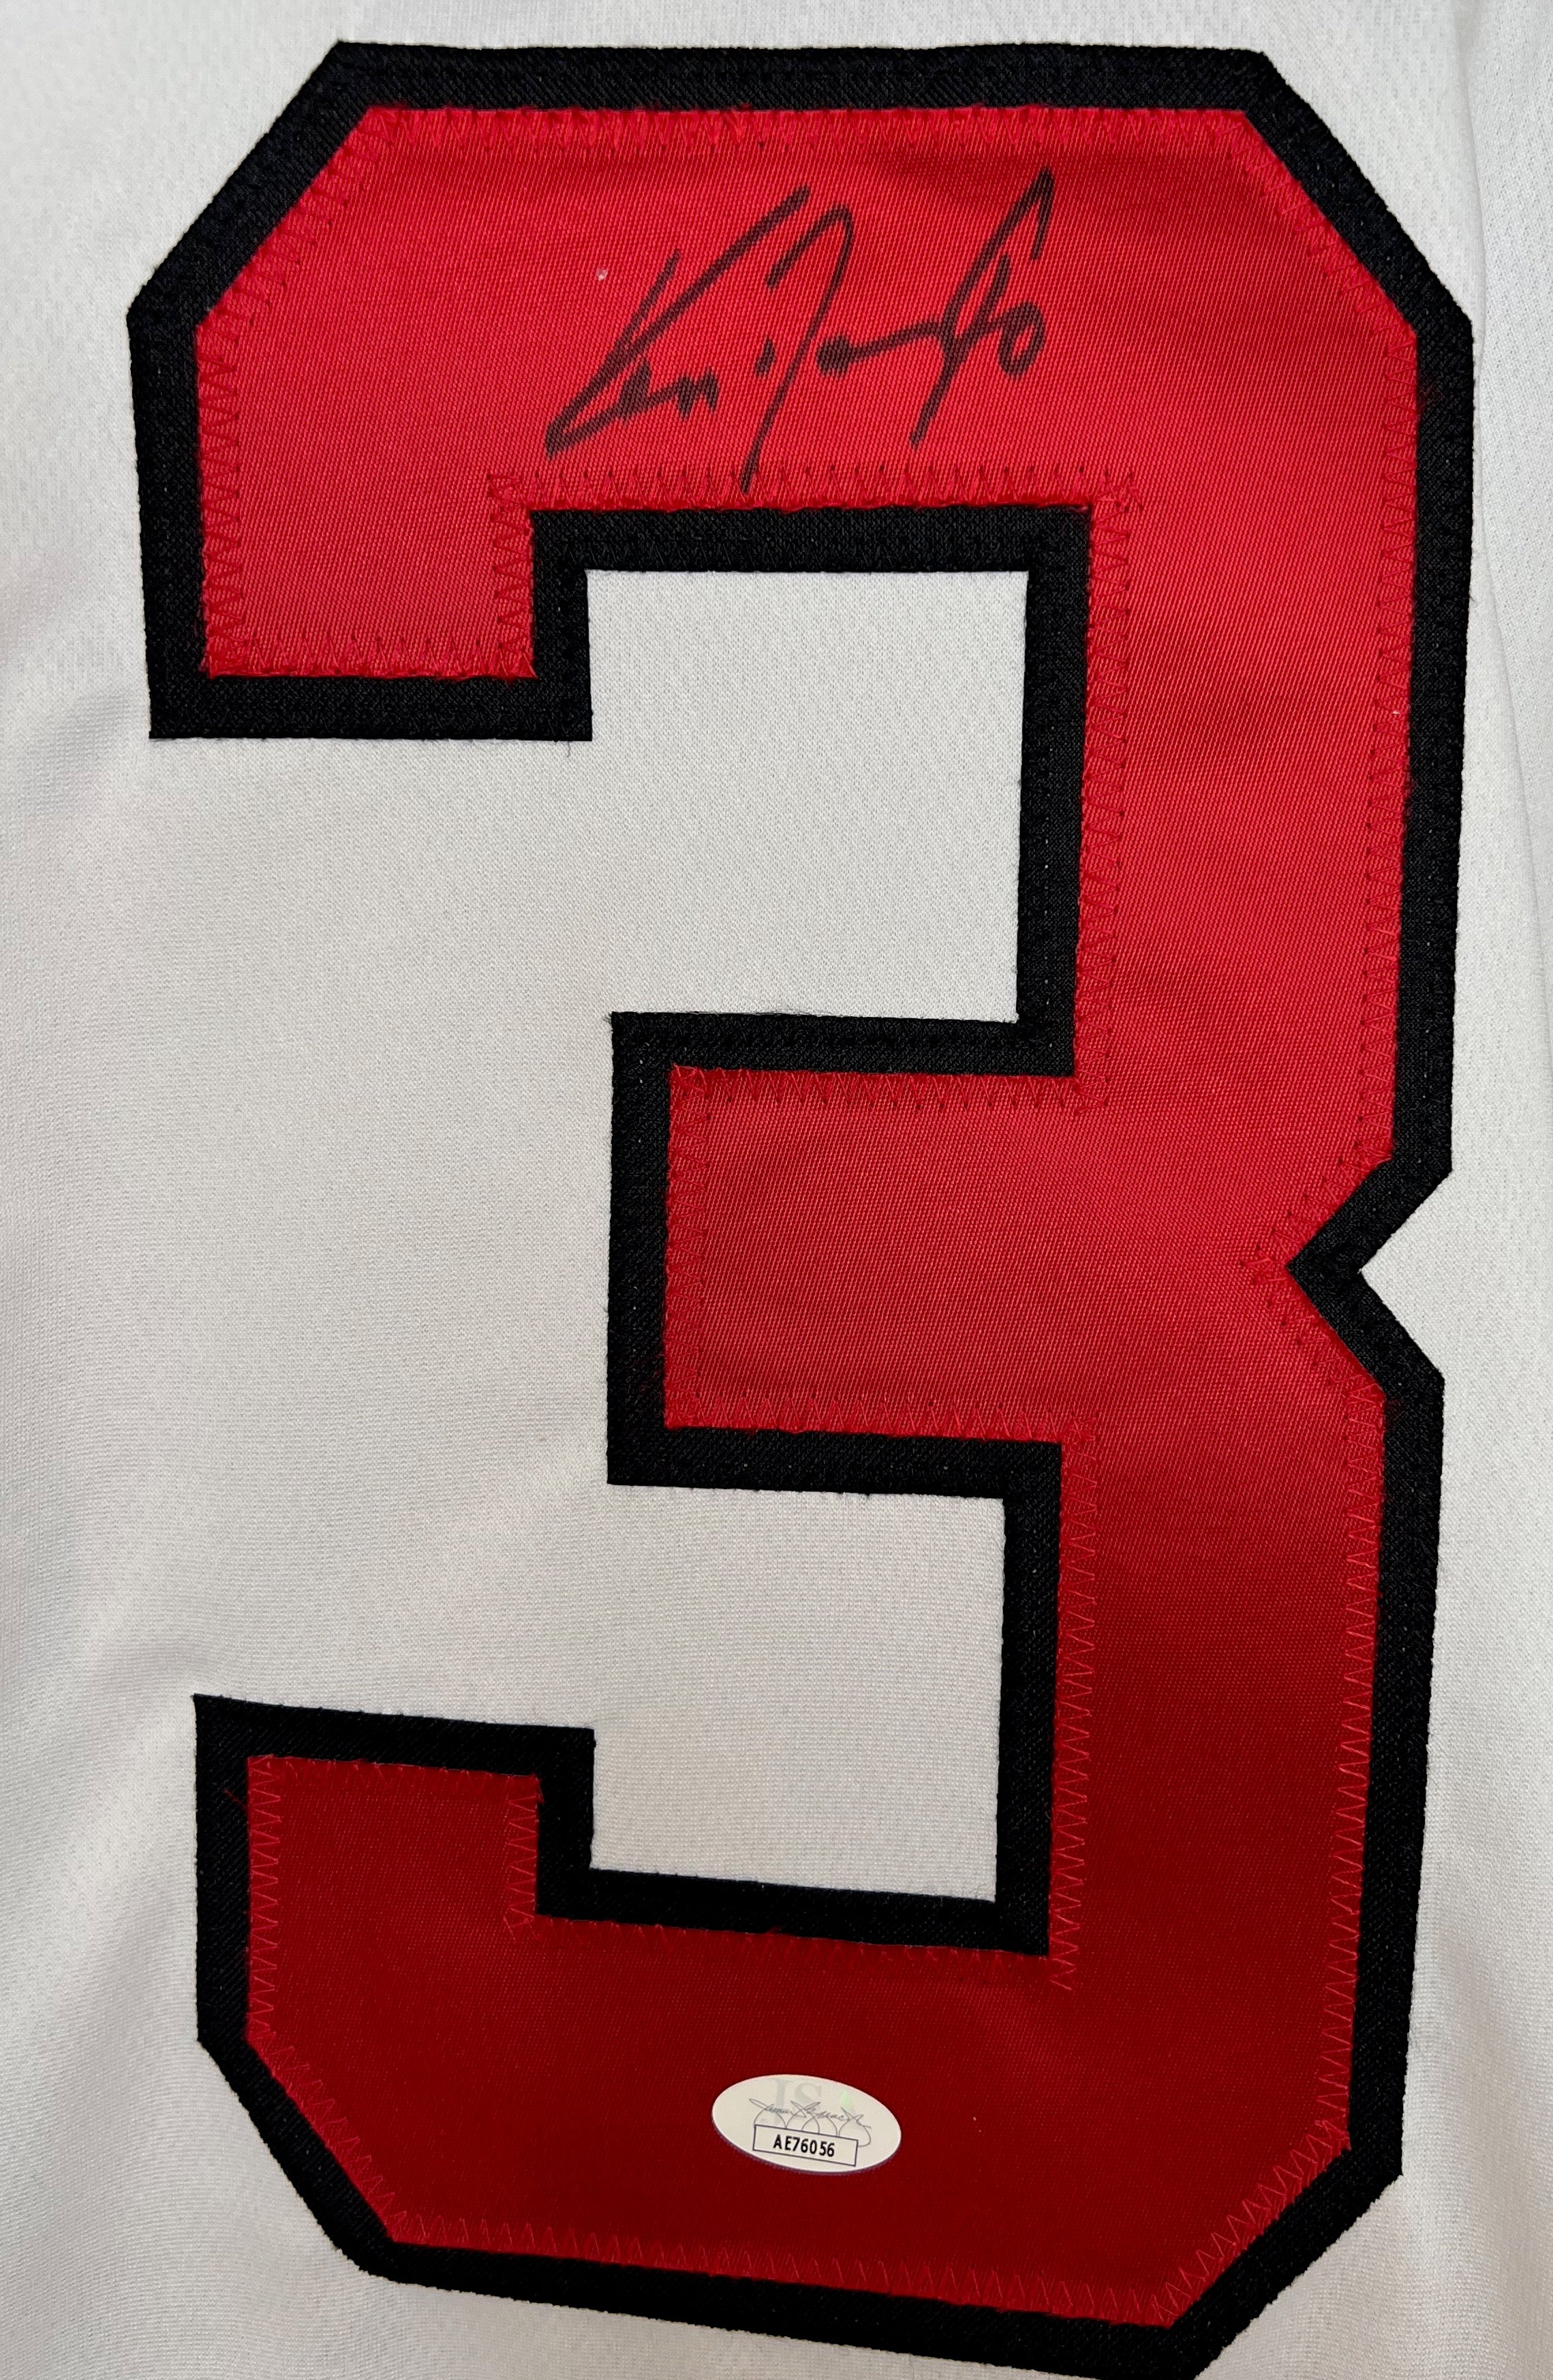 New Jersey Devils Ken Daneyko Official White Reebok Authentic